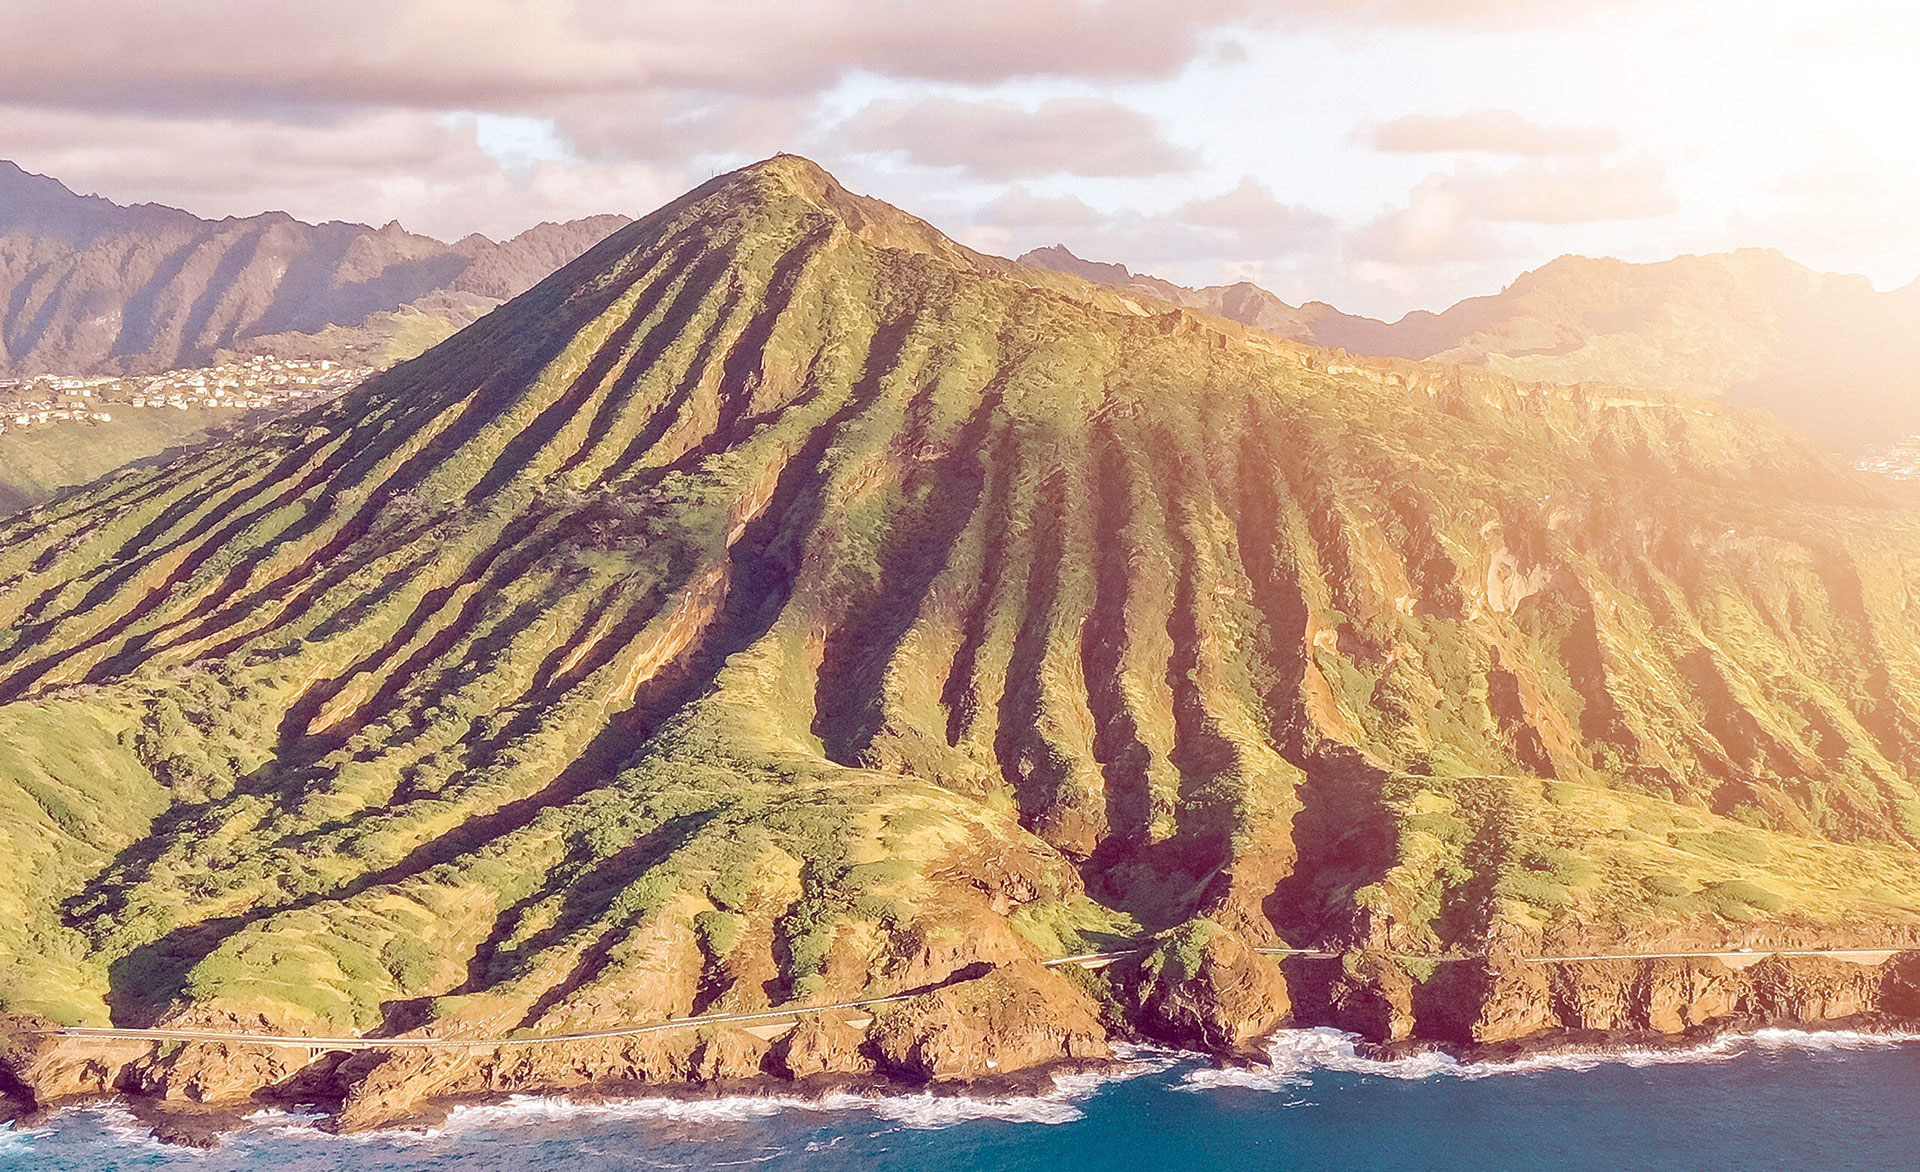 A beginner’s guide to the Hawaiian islands